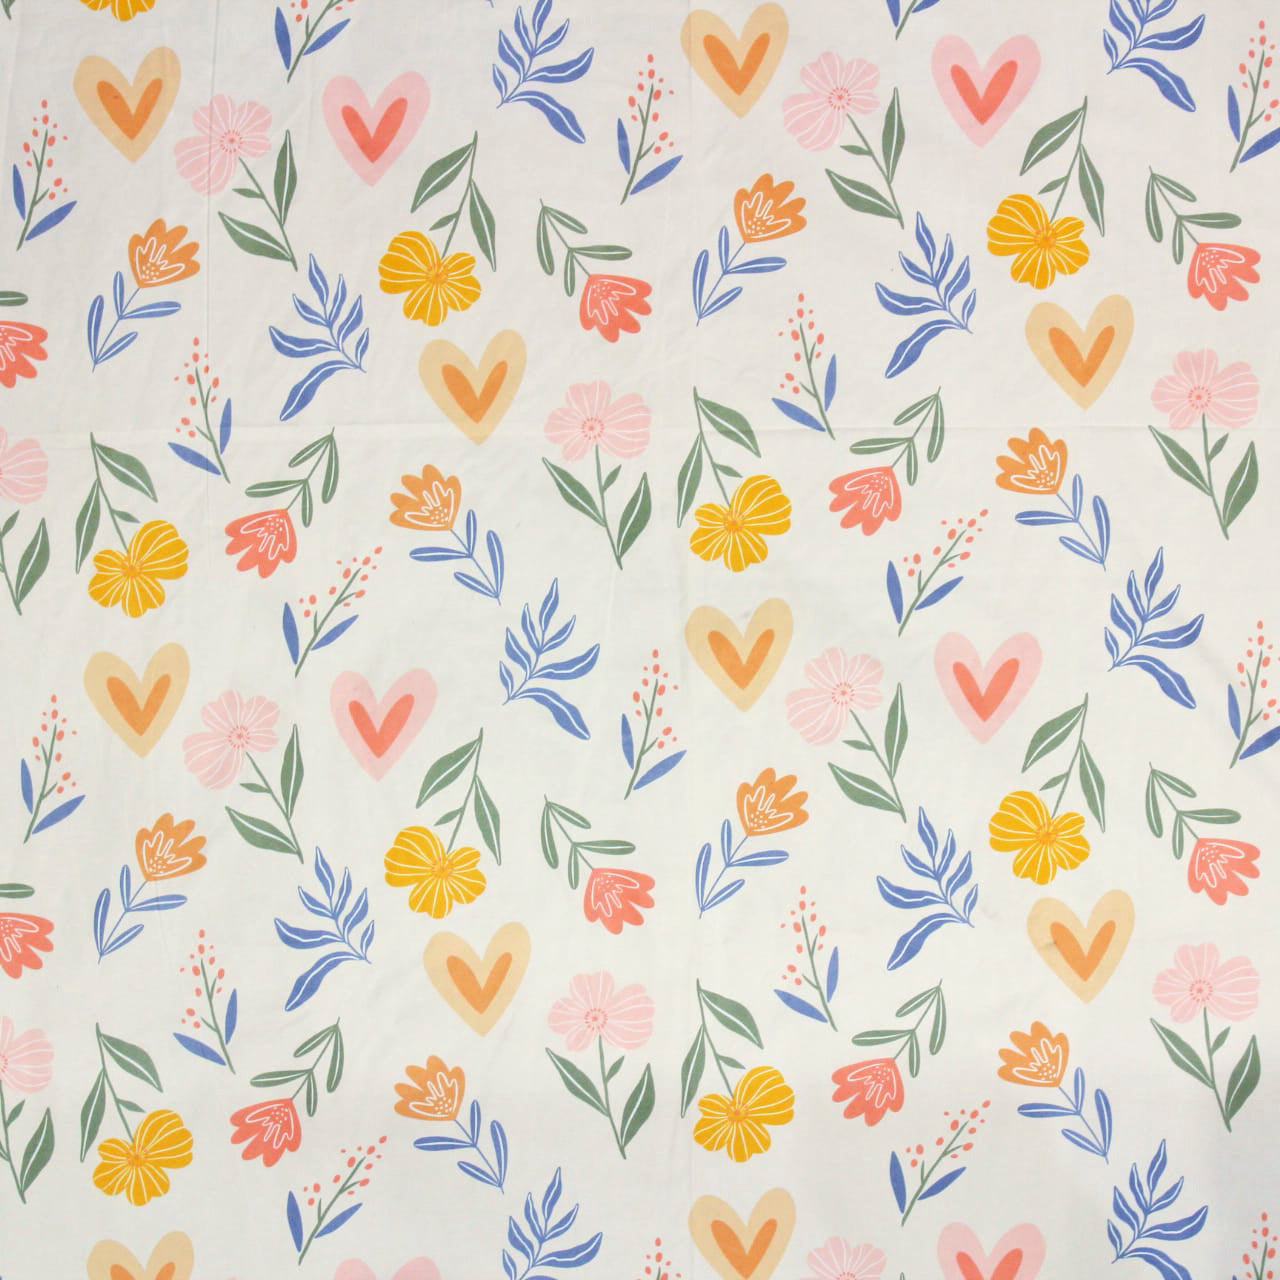 Multicolor Festive Collection Floral Dohar Bedsheet Set (4 Pc) online in India